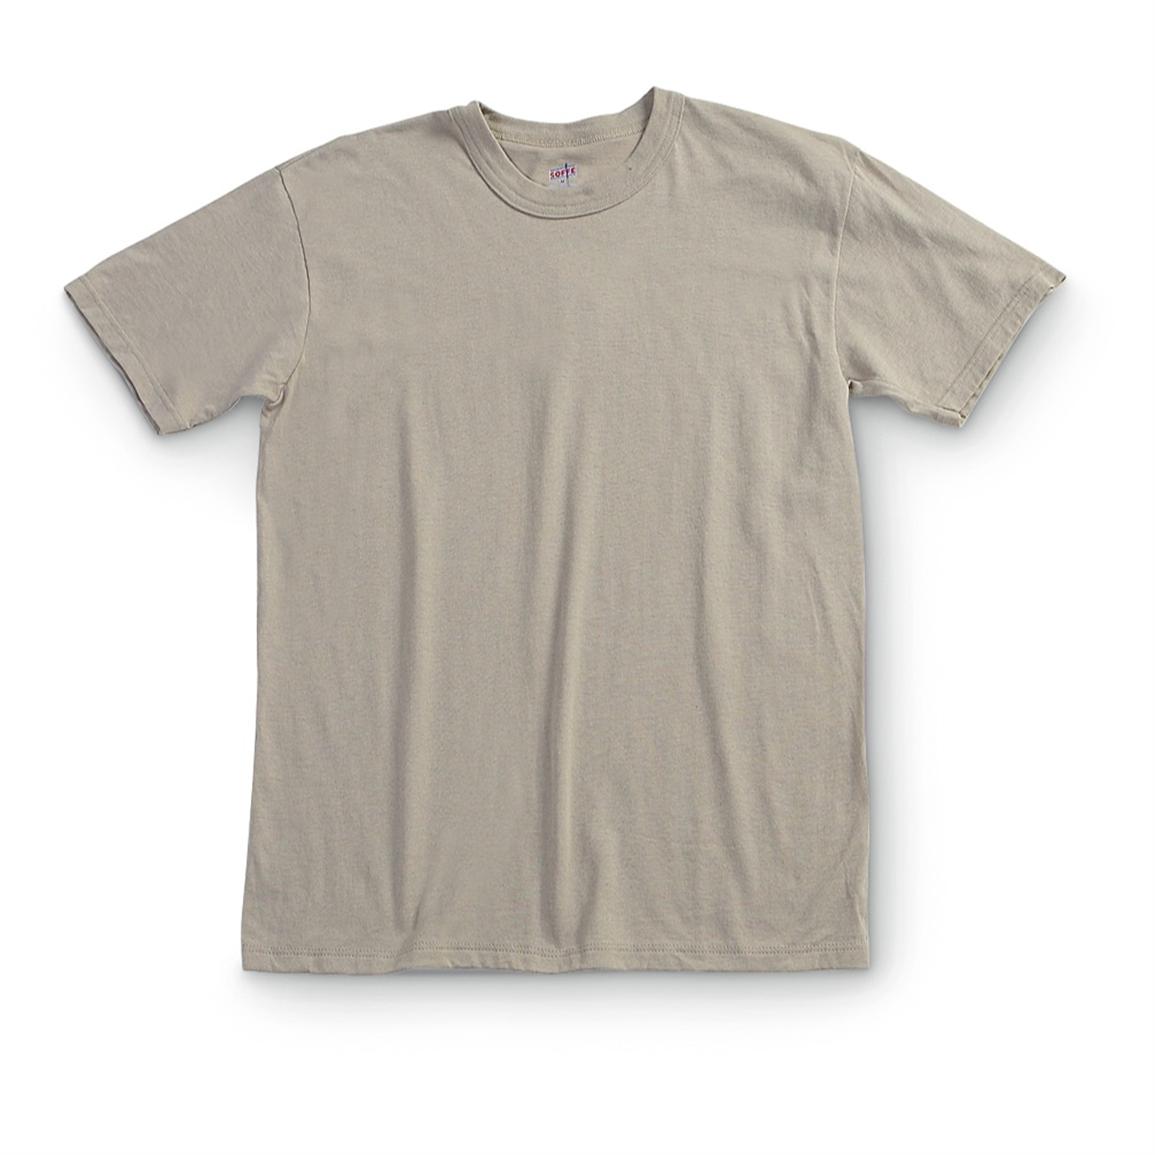 12 - Pk. of New U.S. T - shirts, Tan - 208084, Military T-Shirts at Sportsman's Guide